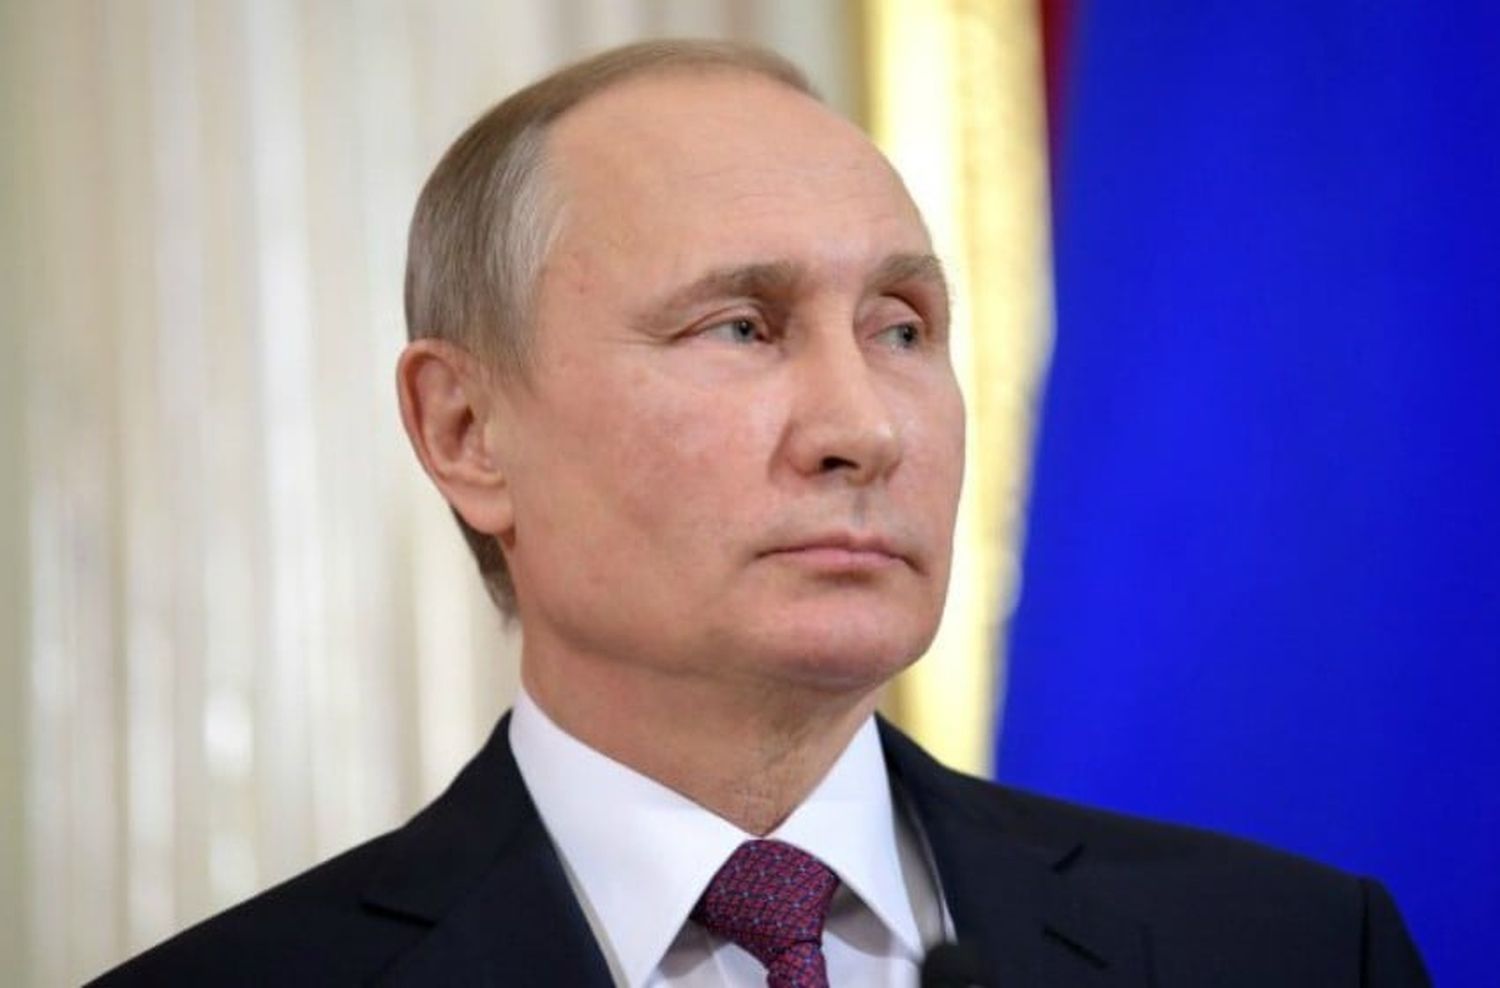 Vladimir Putin amenazó a Occidente con usar armas nucleares si la OTAN envía tropas a Ucrania